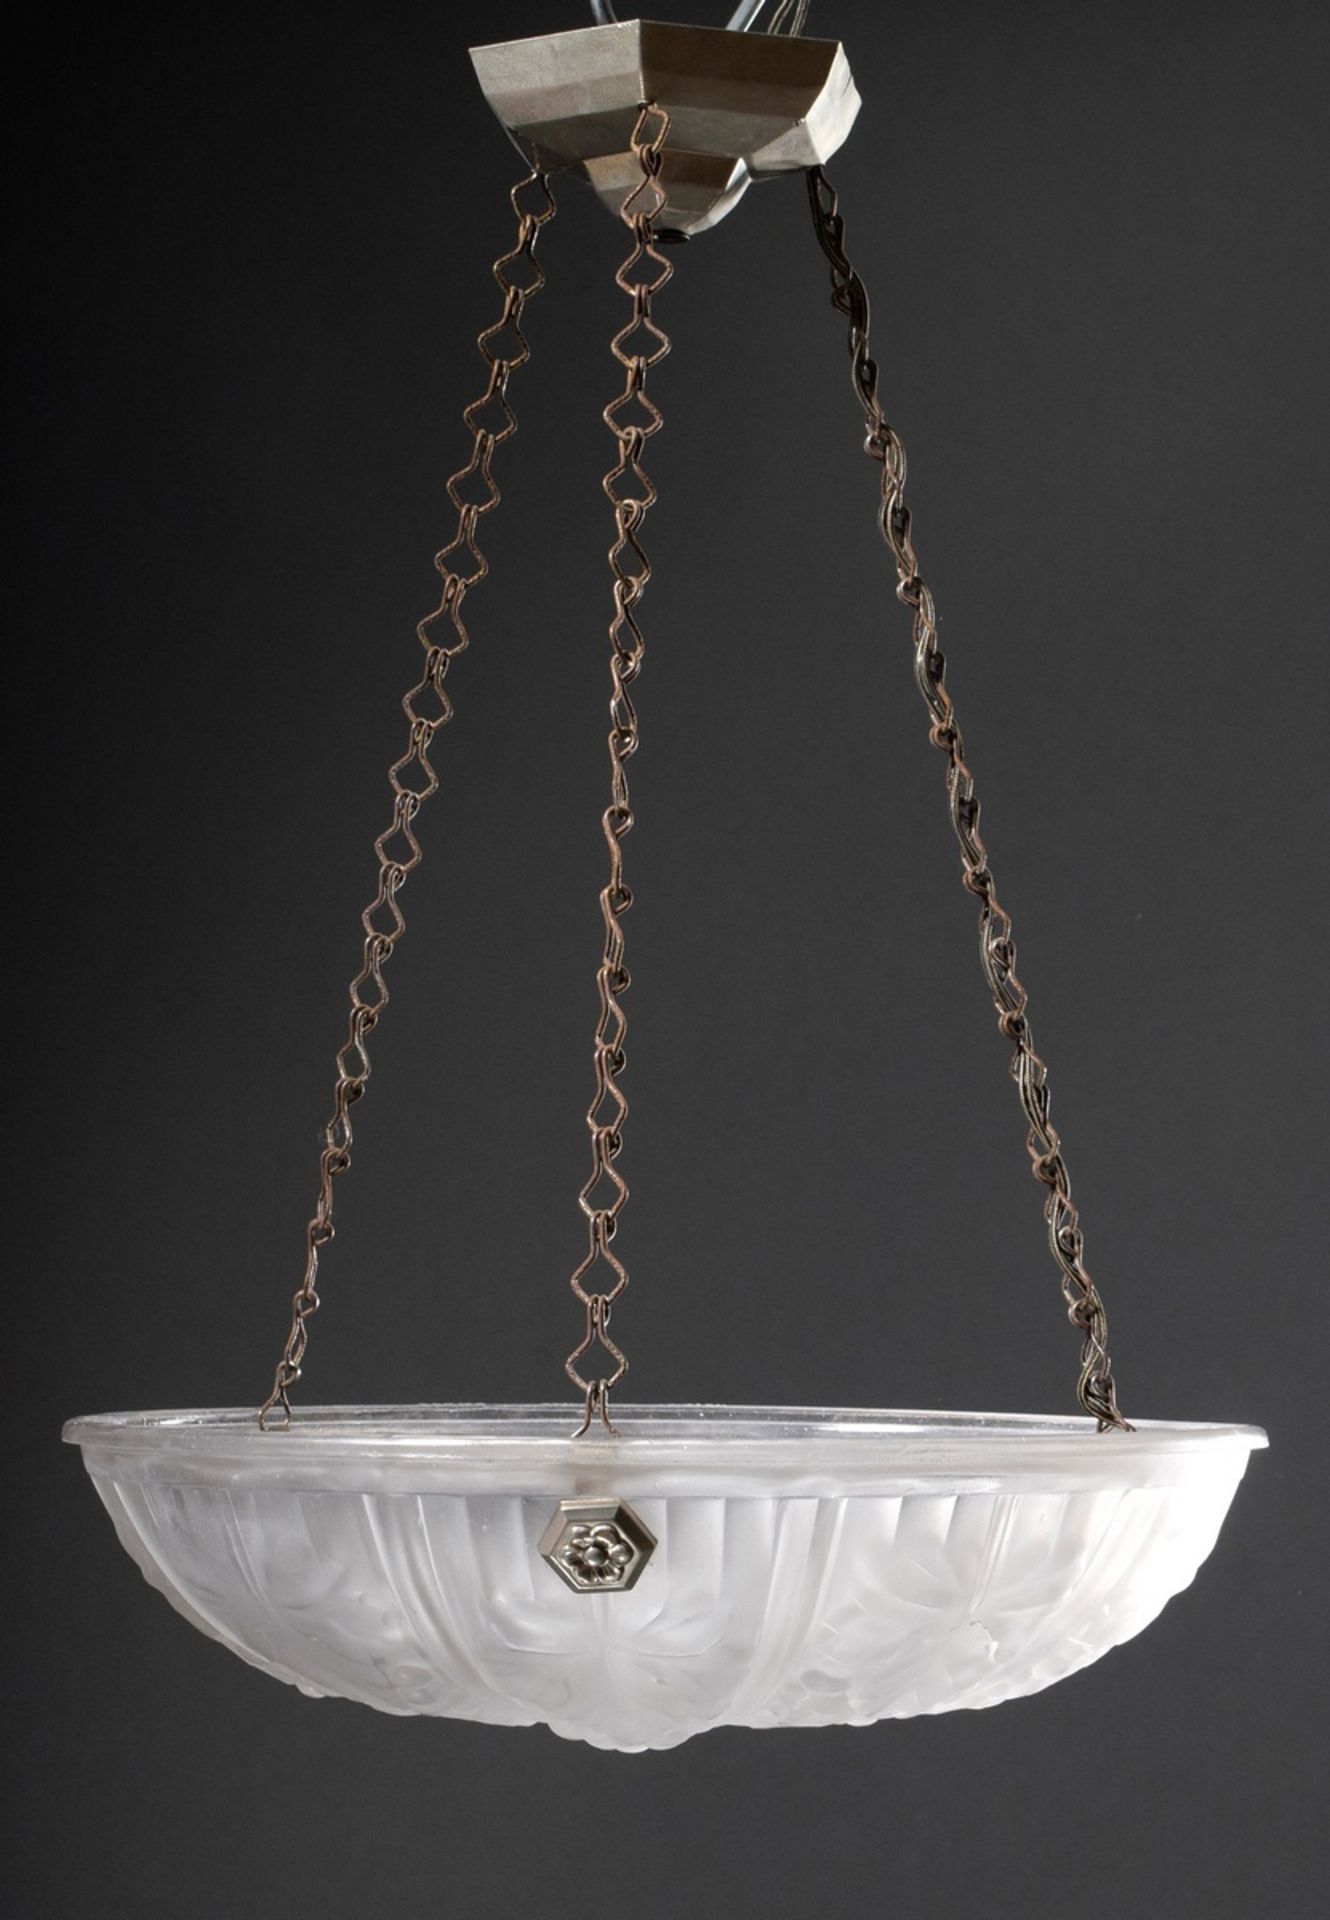 Art Deco ceiling lamp with satinised pressed glass bowl "vine leaves" decor on chromed metal frame,